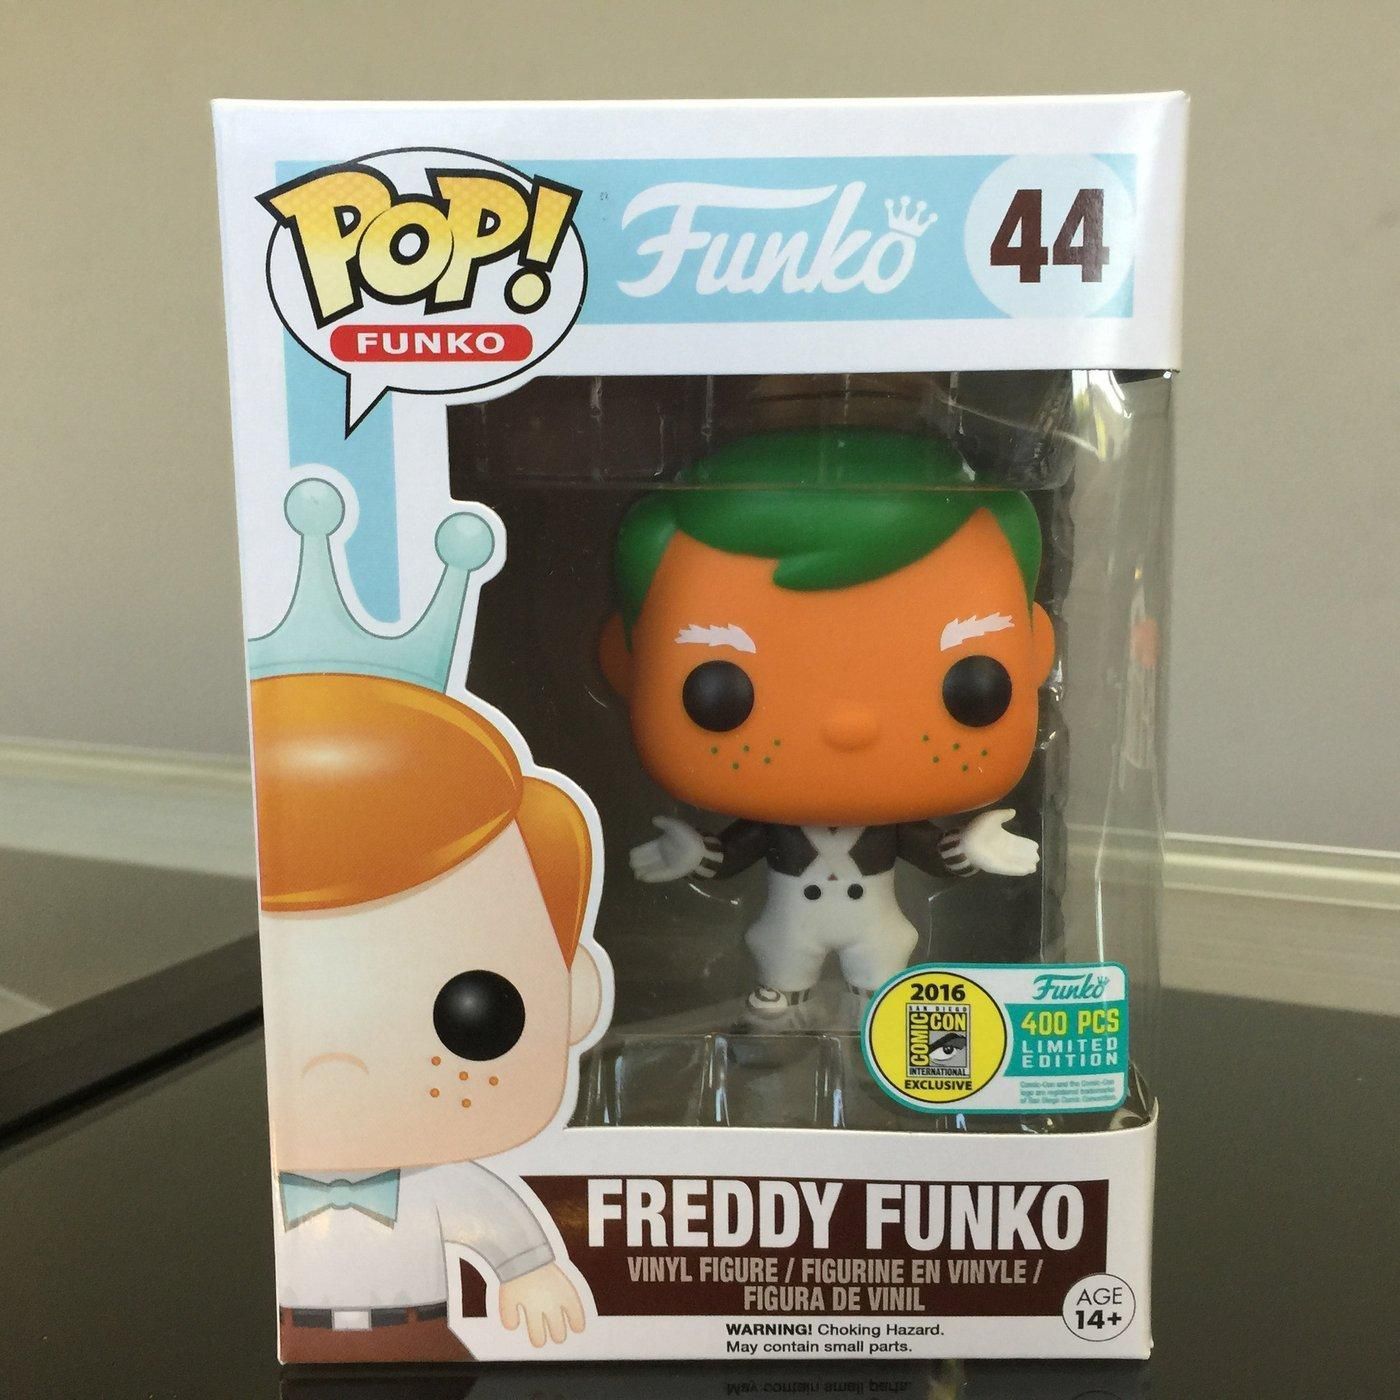 Funko Pop! Freddy Funko - (Glow) (Freddy Funko)